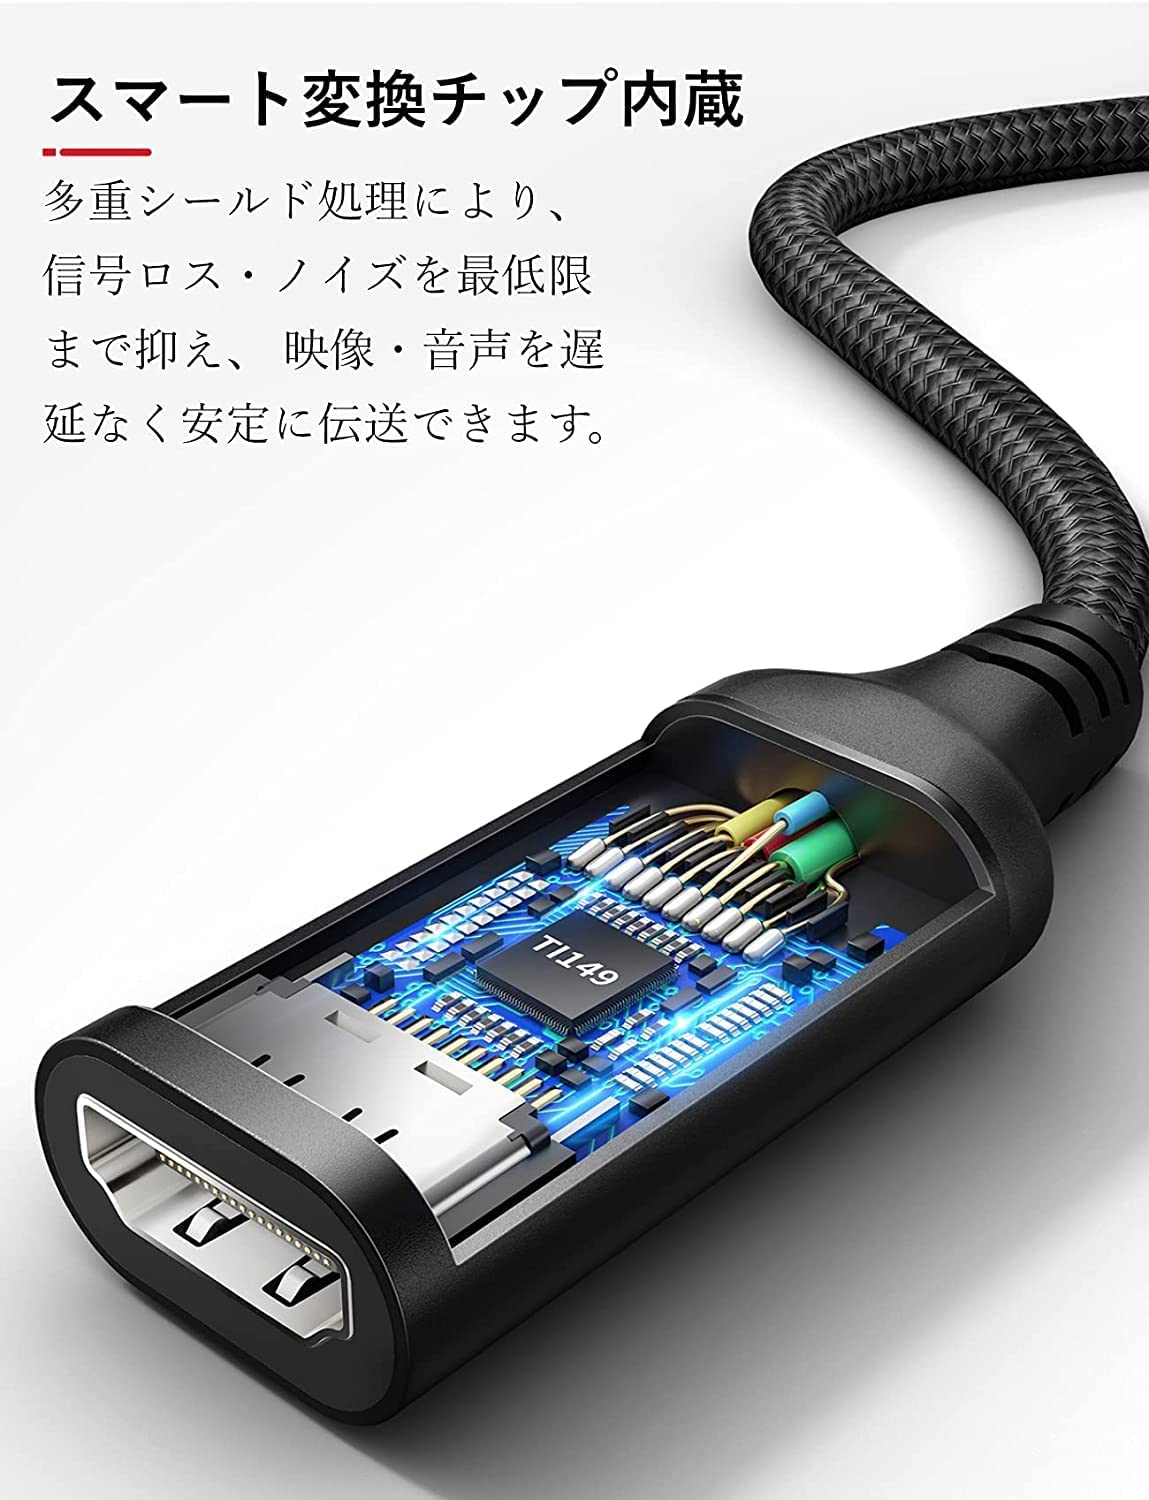 NIMASO HDMI変換ケーブル 20cm type-A Displayport HDMI 変換アダプター コネクタ ディスプレイポート HDMI 変換 ケーブル 4K対応 オス・メス